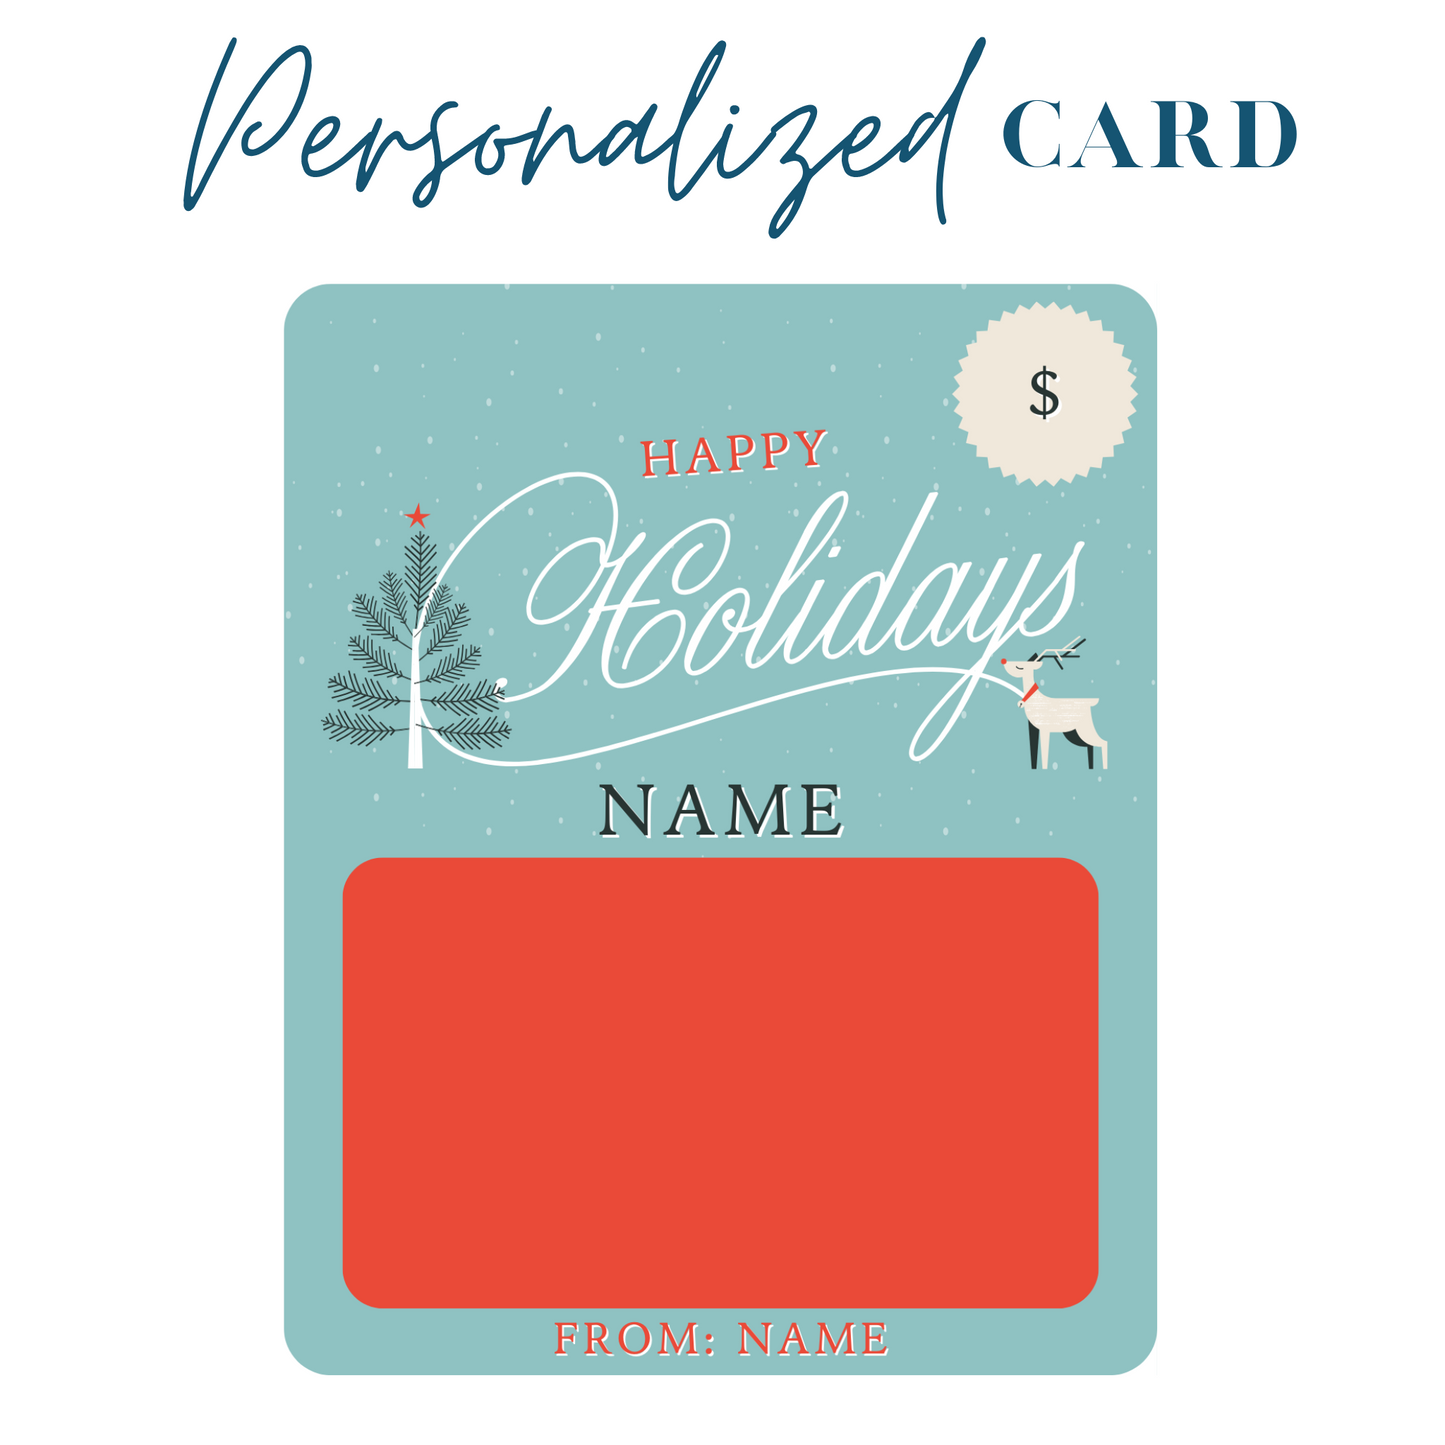 Happy Holidays Dear Gift Card holder greeting card